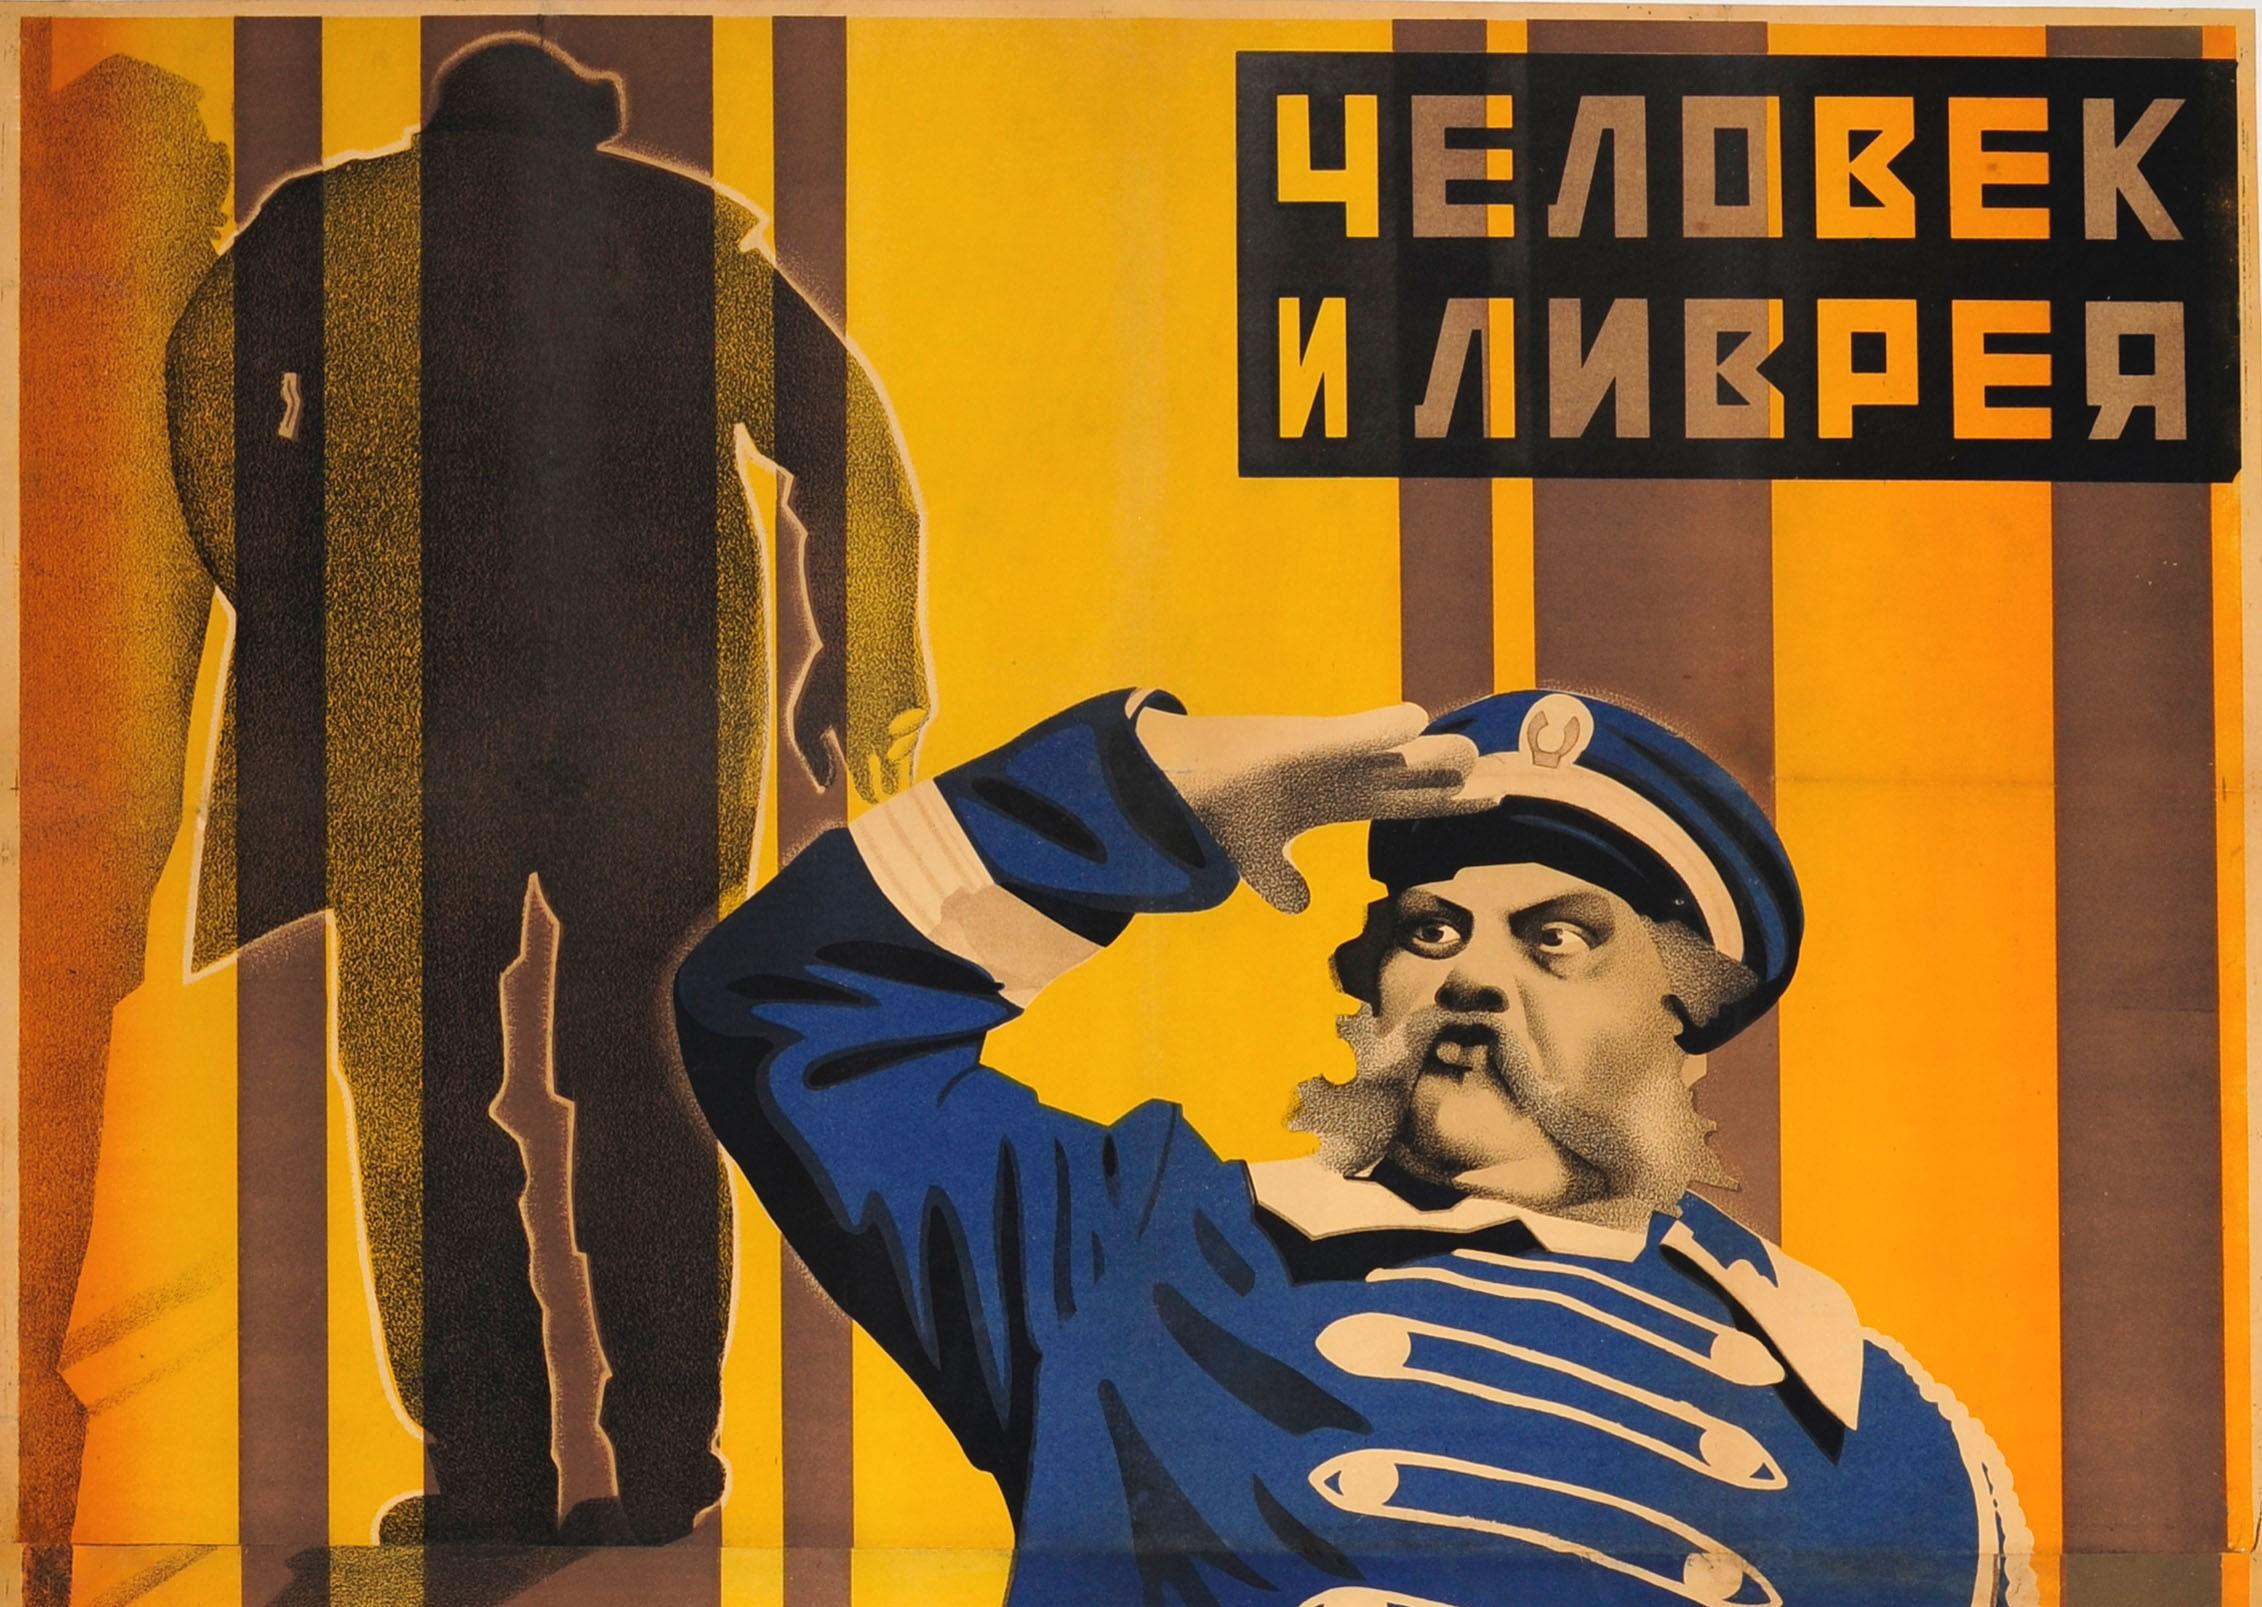 Original 1927 Constructivist Soviet Movie Poster Der Letzte Mann The Last Laugh - Print by Stenberg Brothers and Yakov Ruklevsky